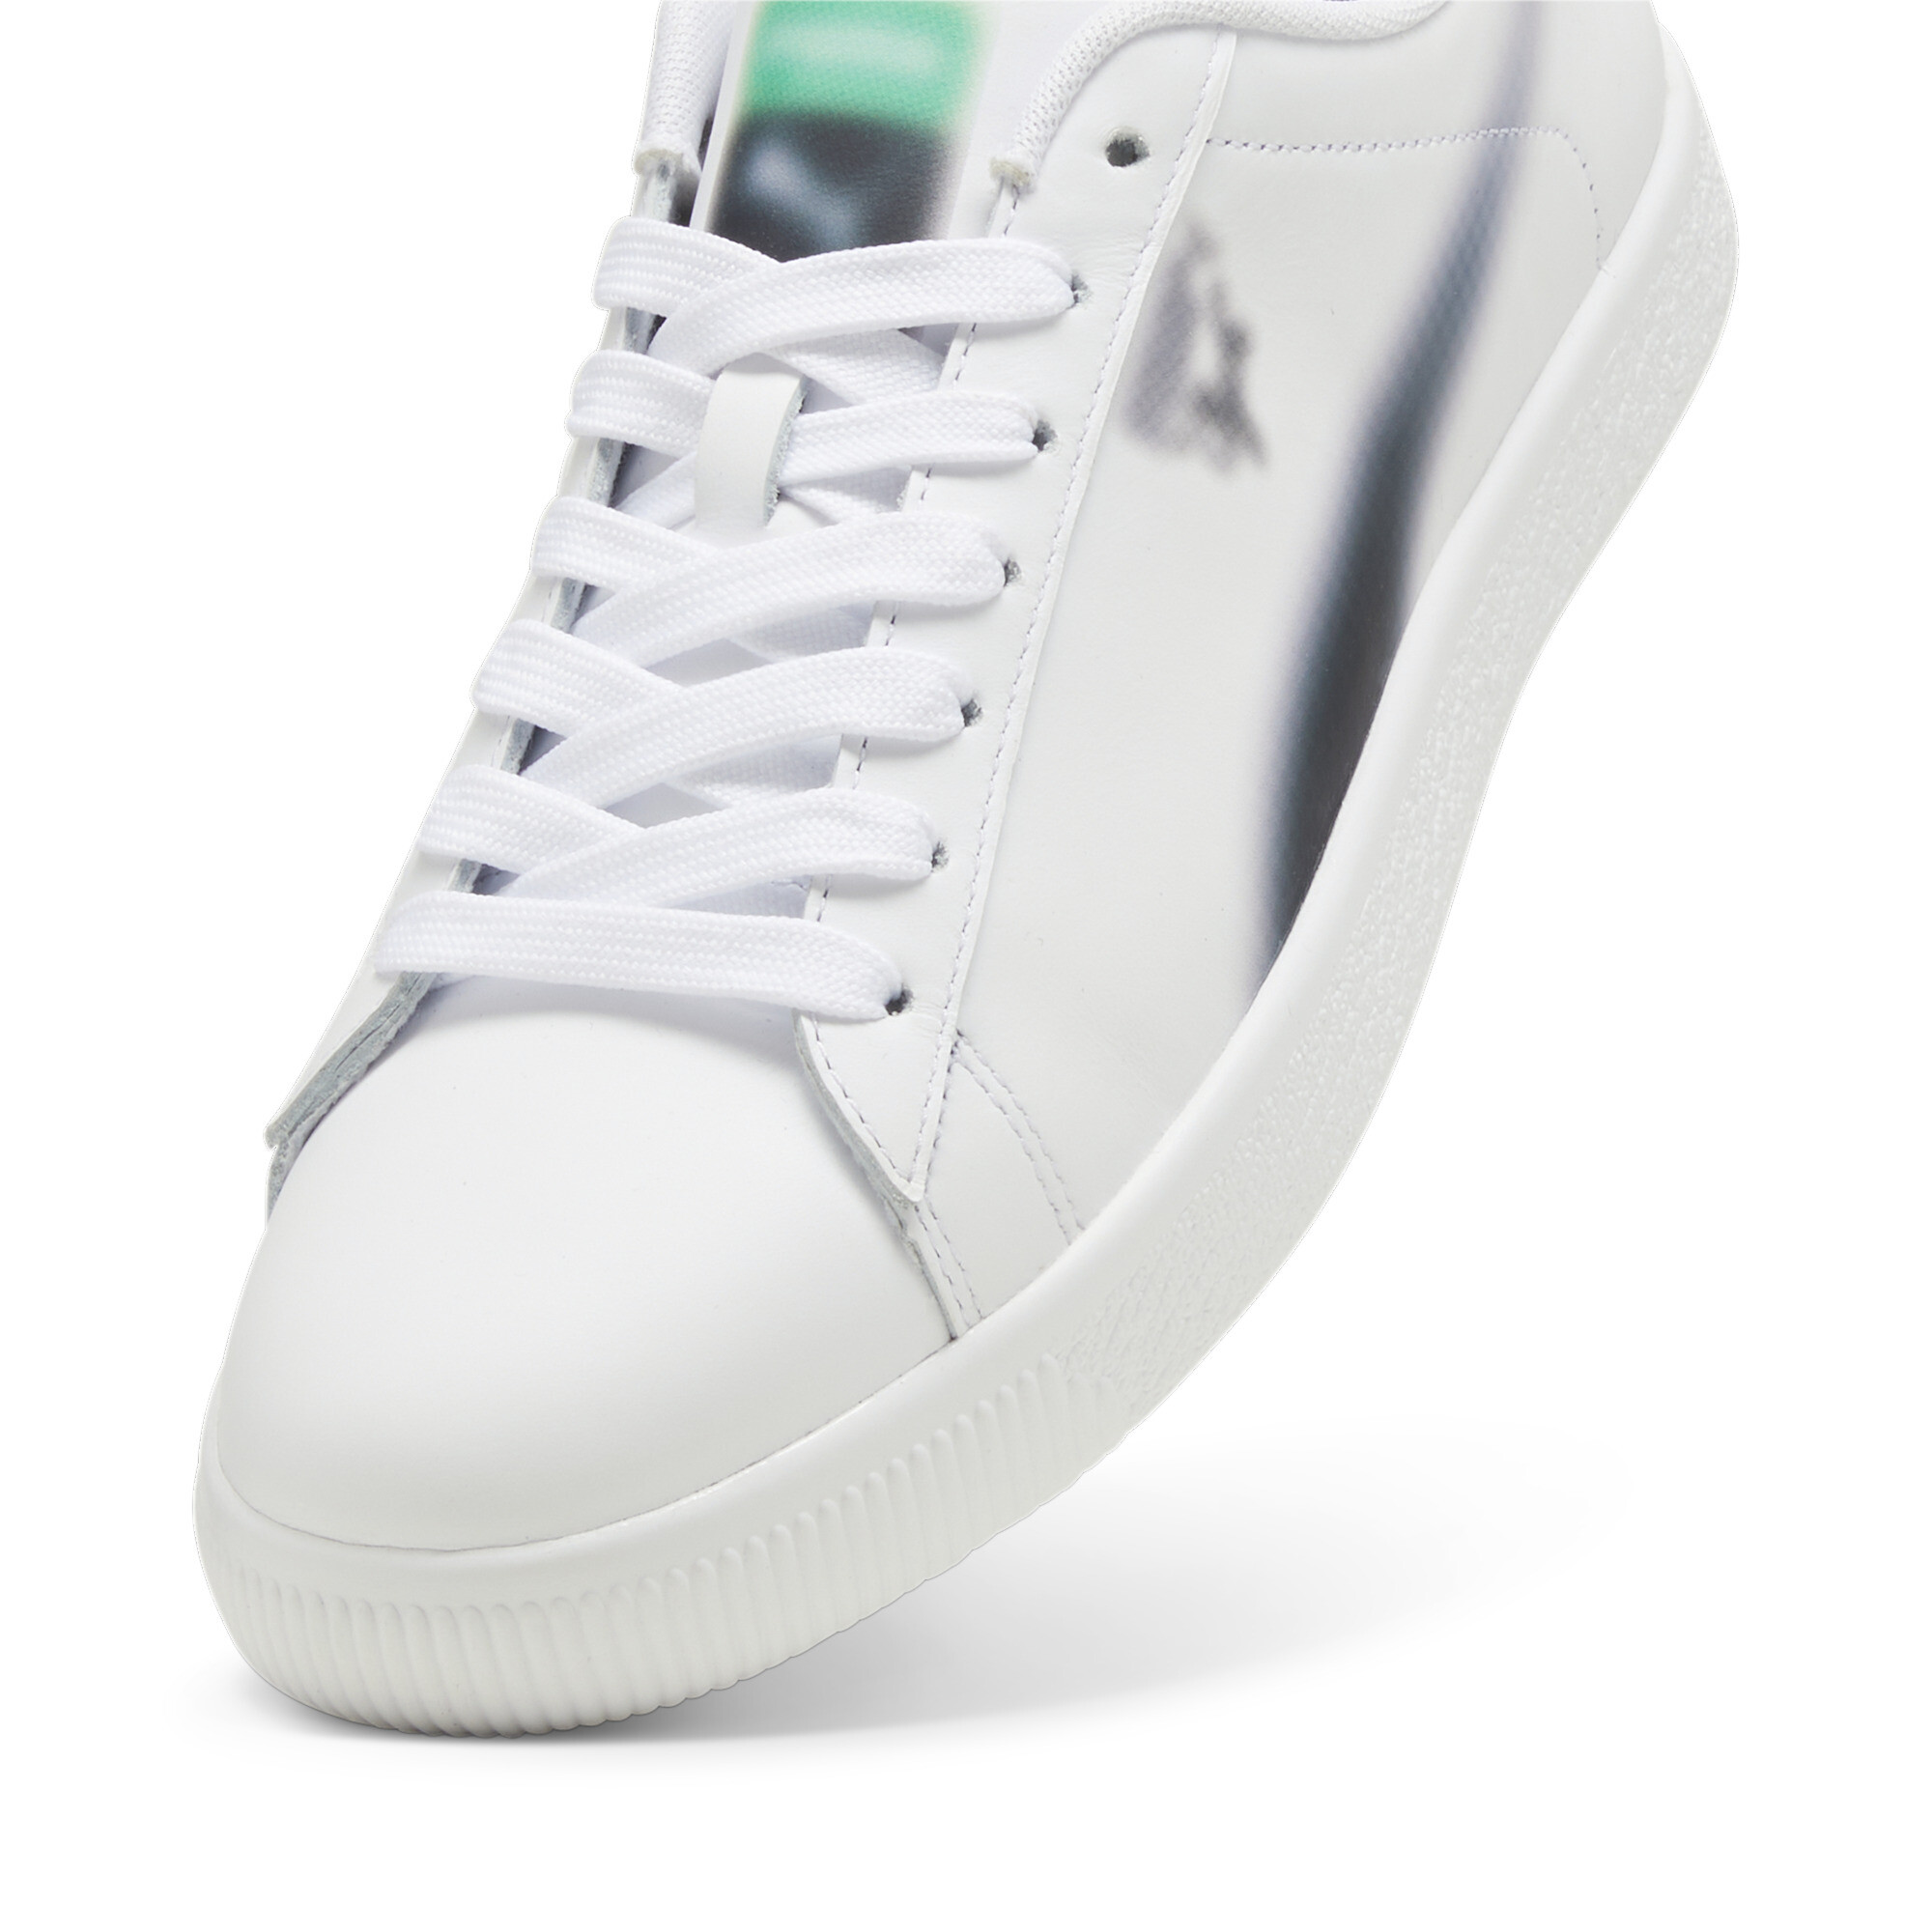 Puma Clyde SKRT SKRT Sneakers, White, Size 35.5, Shoes